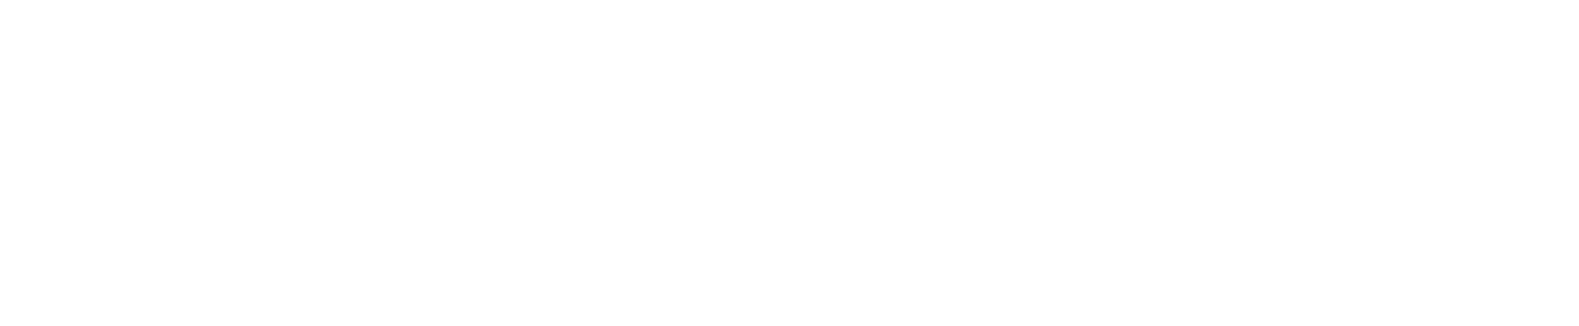 Everest Group Logo groß für dunkle Hintergründe (transparentes PNG)